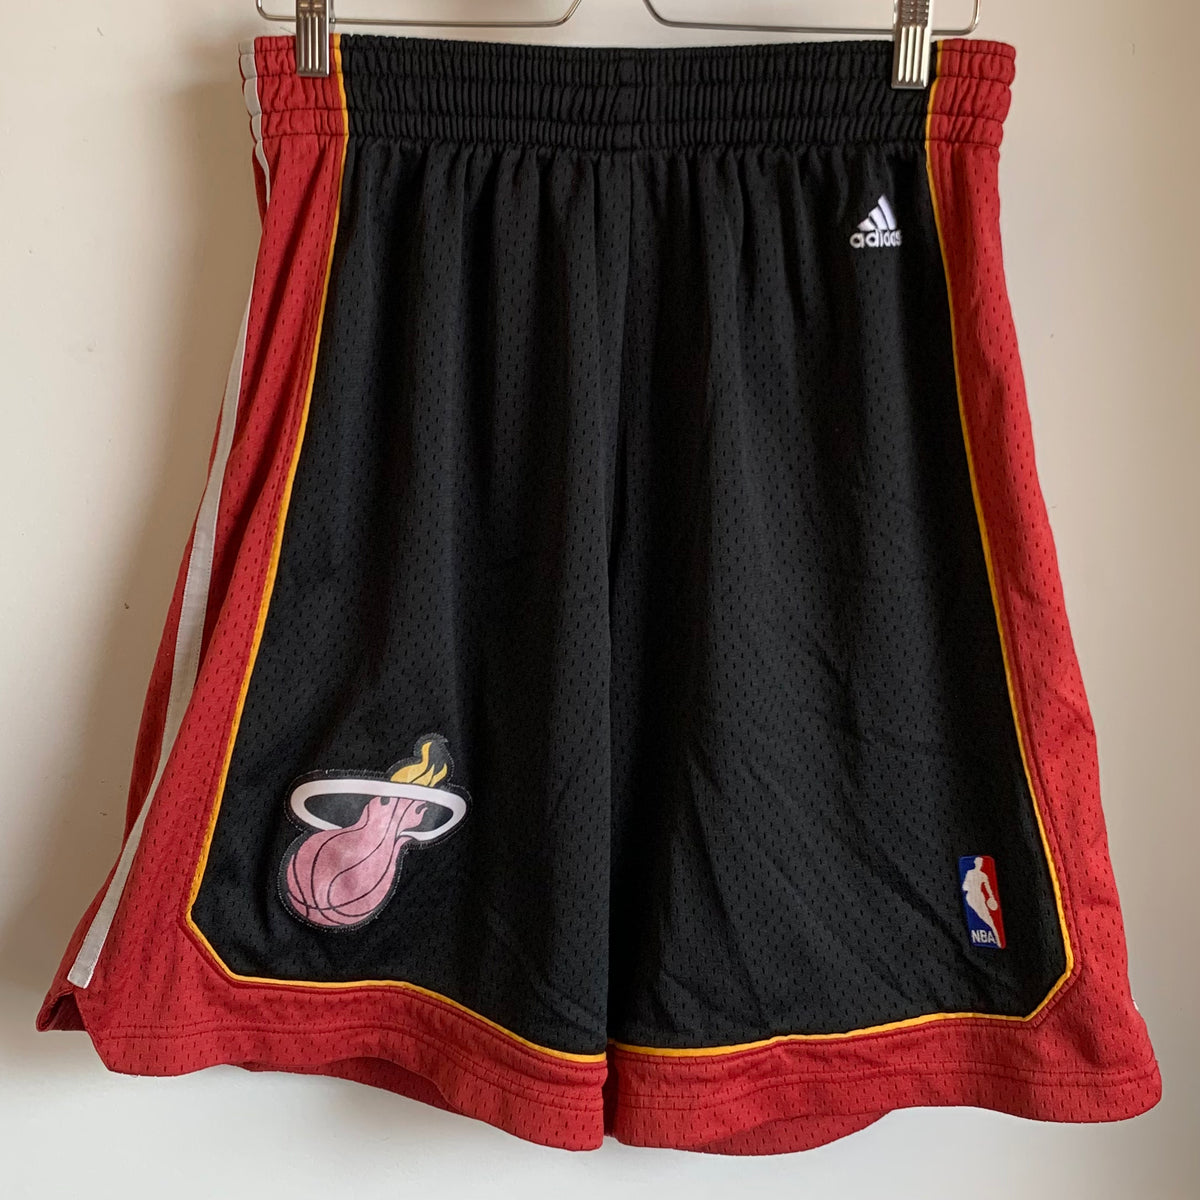 Adidas Miami Black Basketball Shorts Laundry